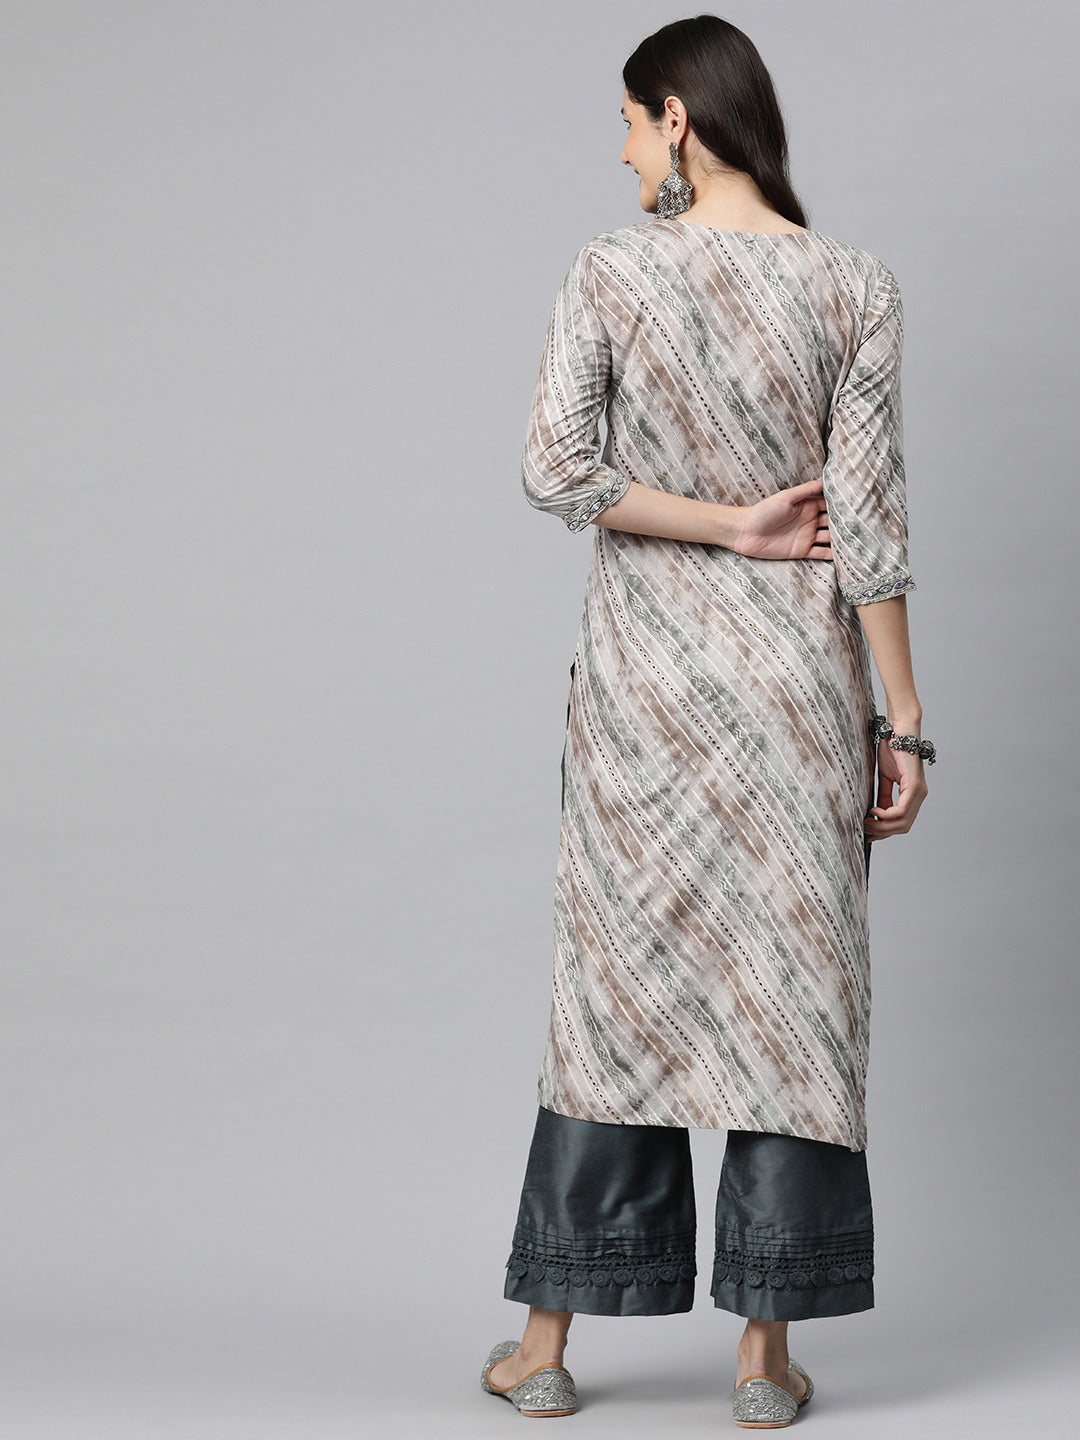 Straight Style Rayon Fabric Grey Color Kurta